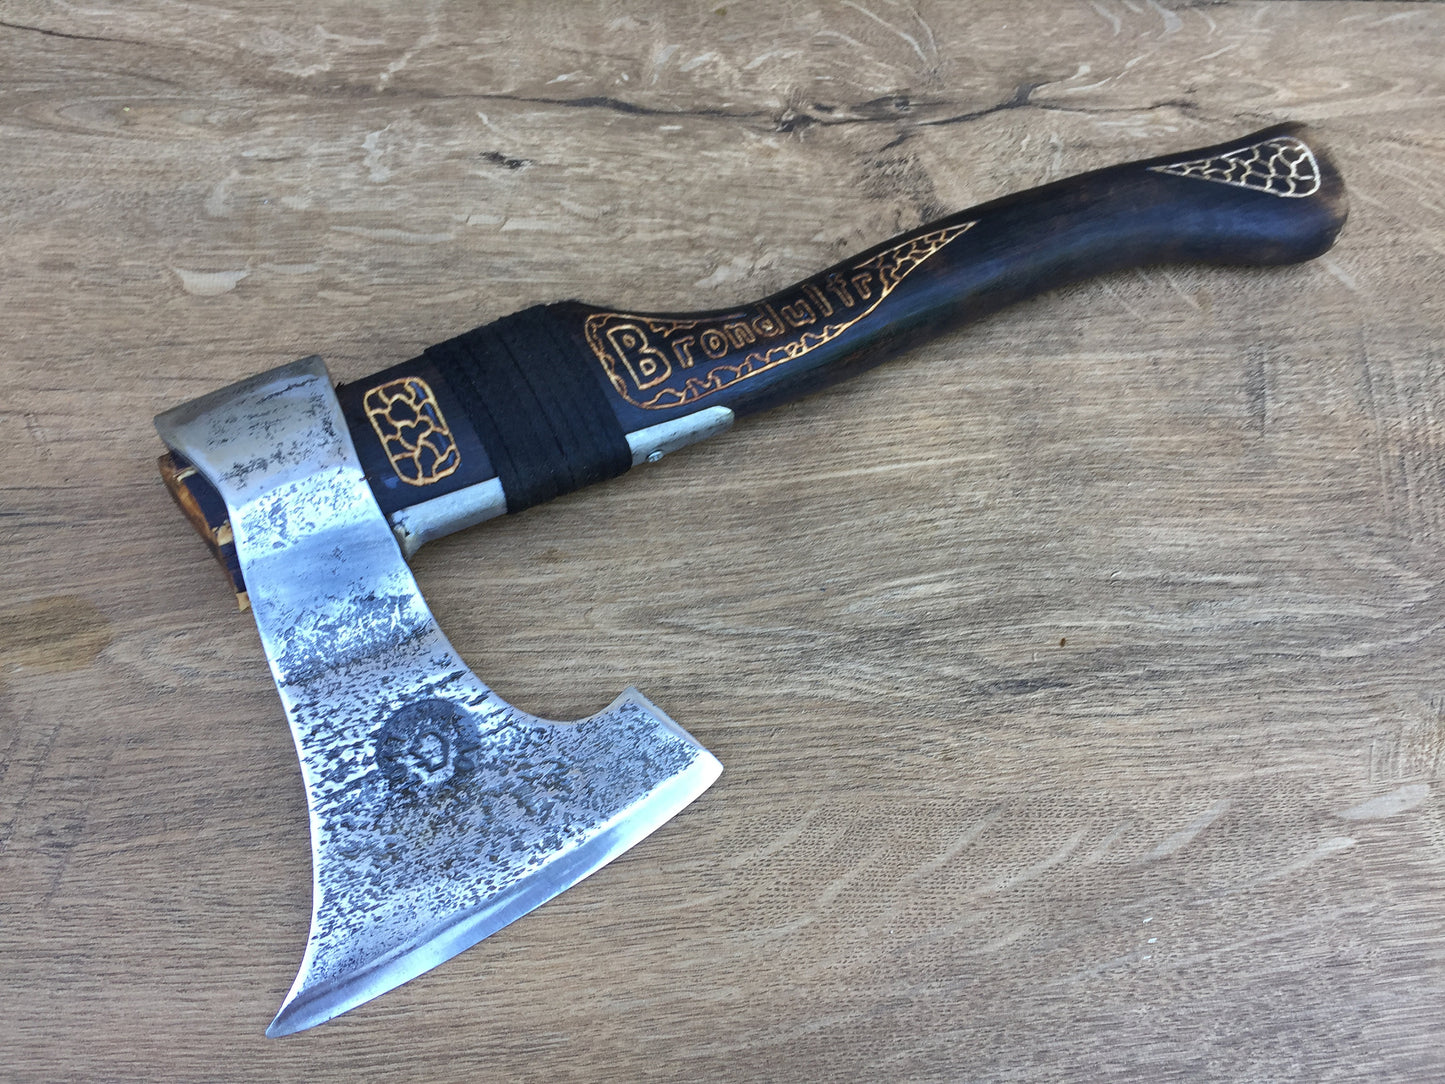 Viking axe, manly iron gifts, medieval axe, tomahawk, bearded axe, carving axe, engraved axe, husband gift, custom axe, dad gifts, cool axe